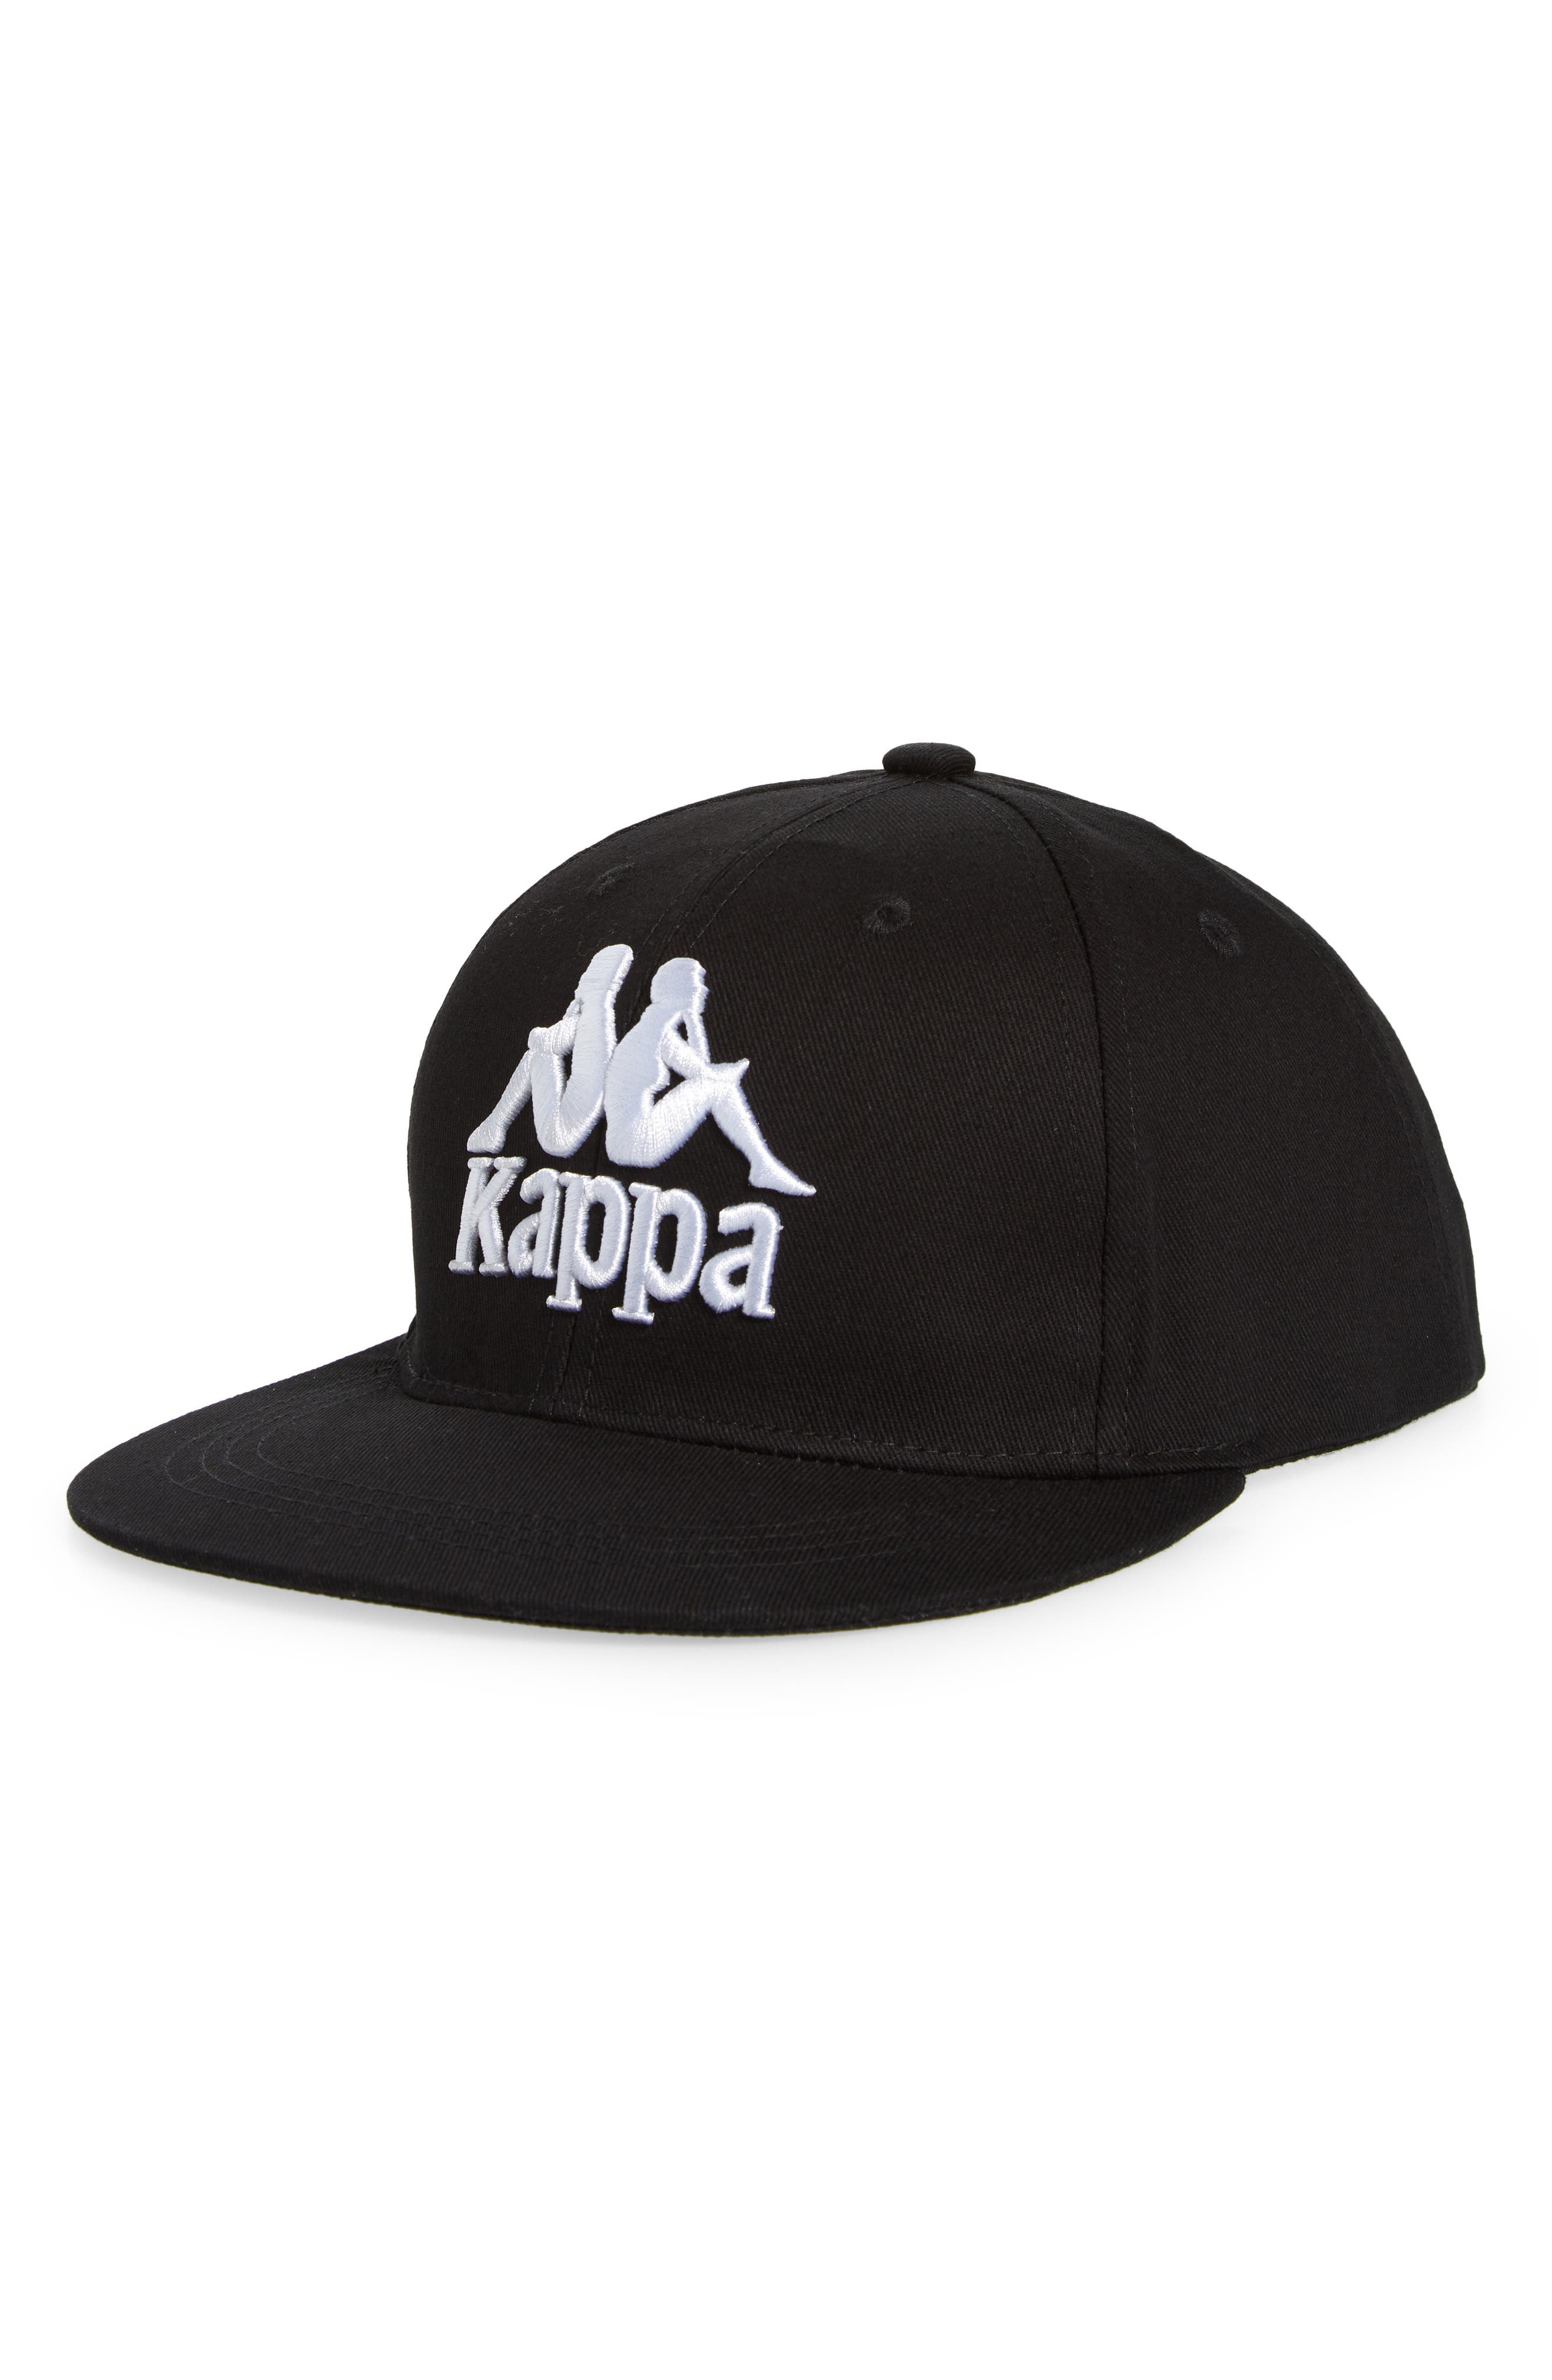 Kappa Authentic Bzadem Twill Baseball Cap in Black Smoke-White Bright at Nordstrom